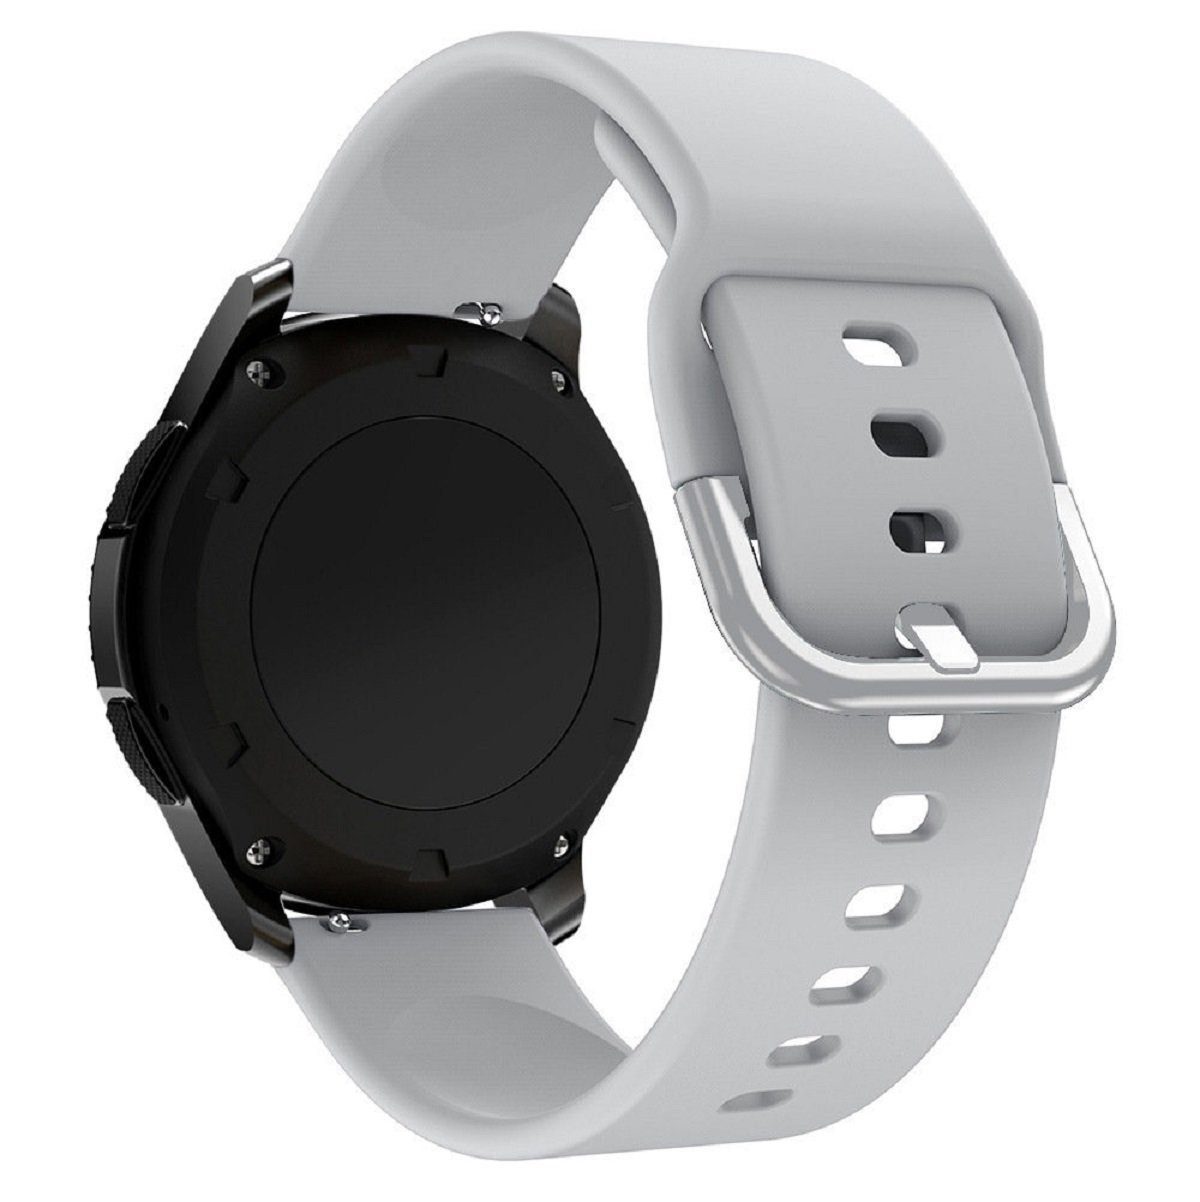 Hurtel Uhrenarmband Silikonarmband Ersatz Smartwatch-Armband universal 22mm Breite Grau